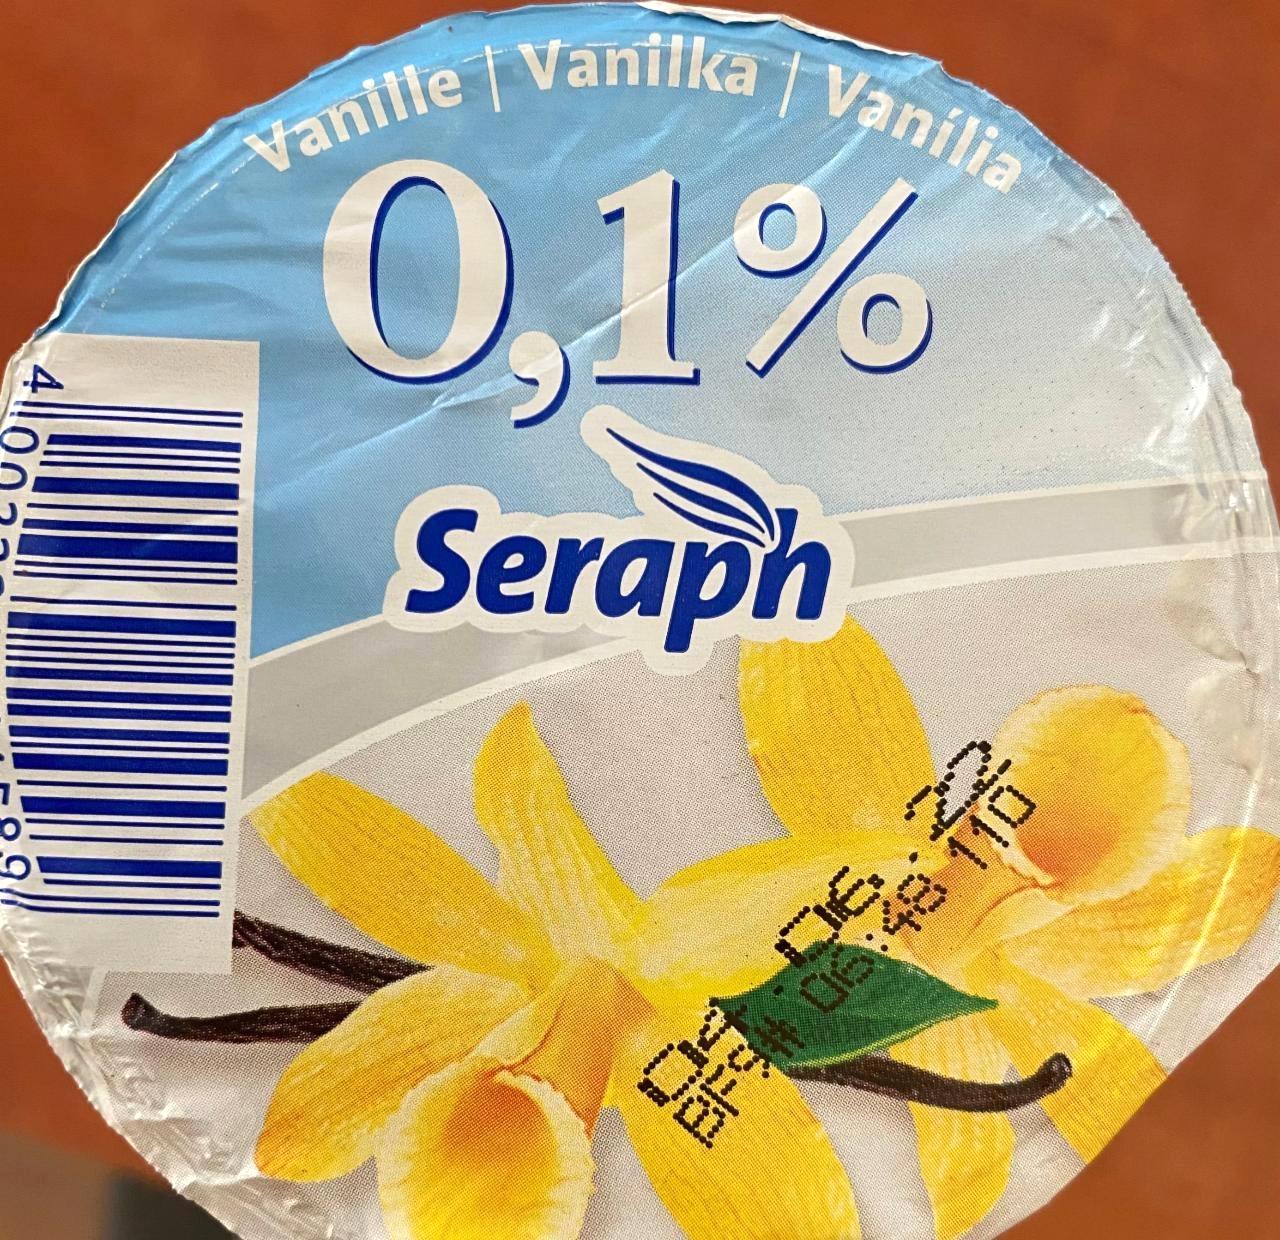 Képek - Seraph 0,1% joghurt Vanília